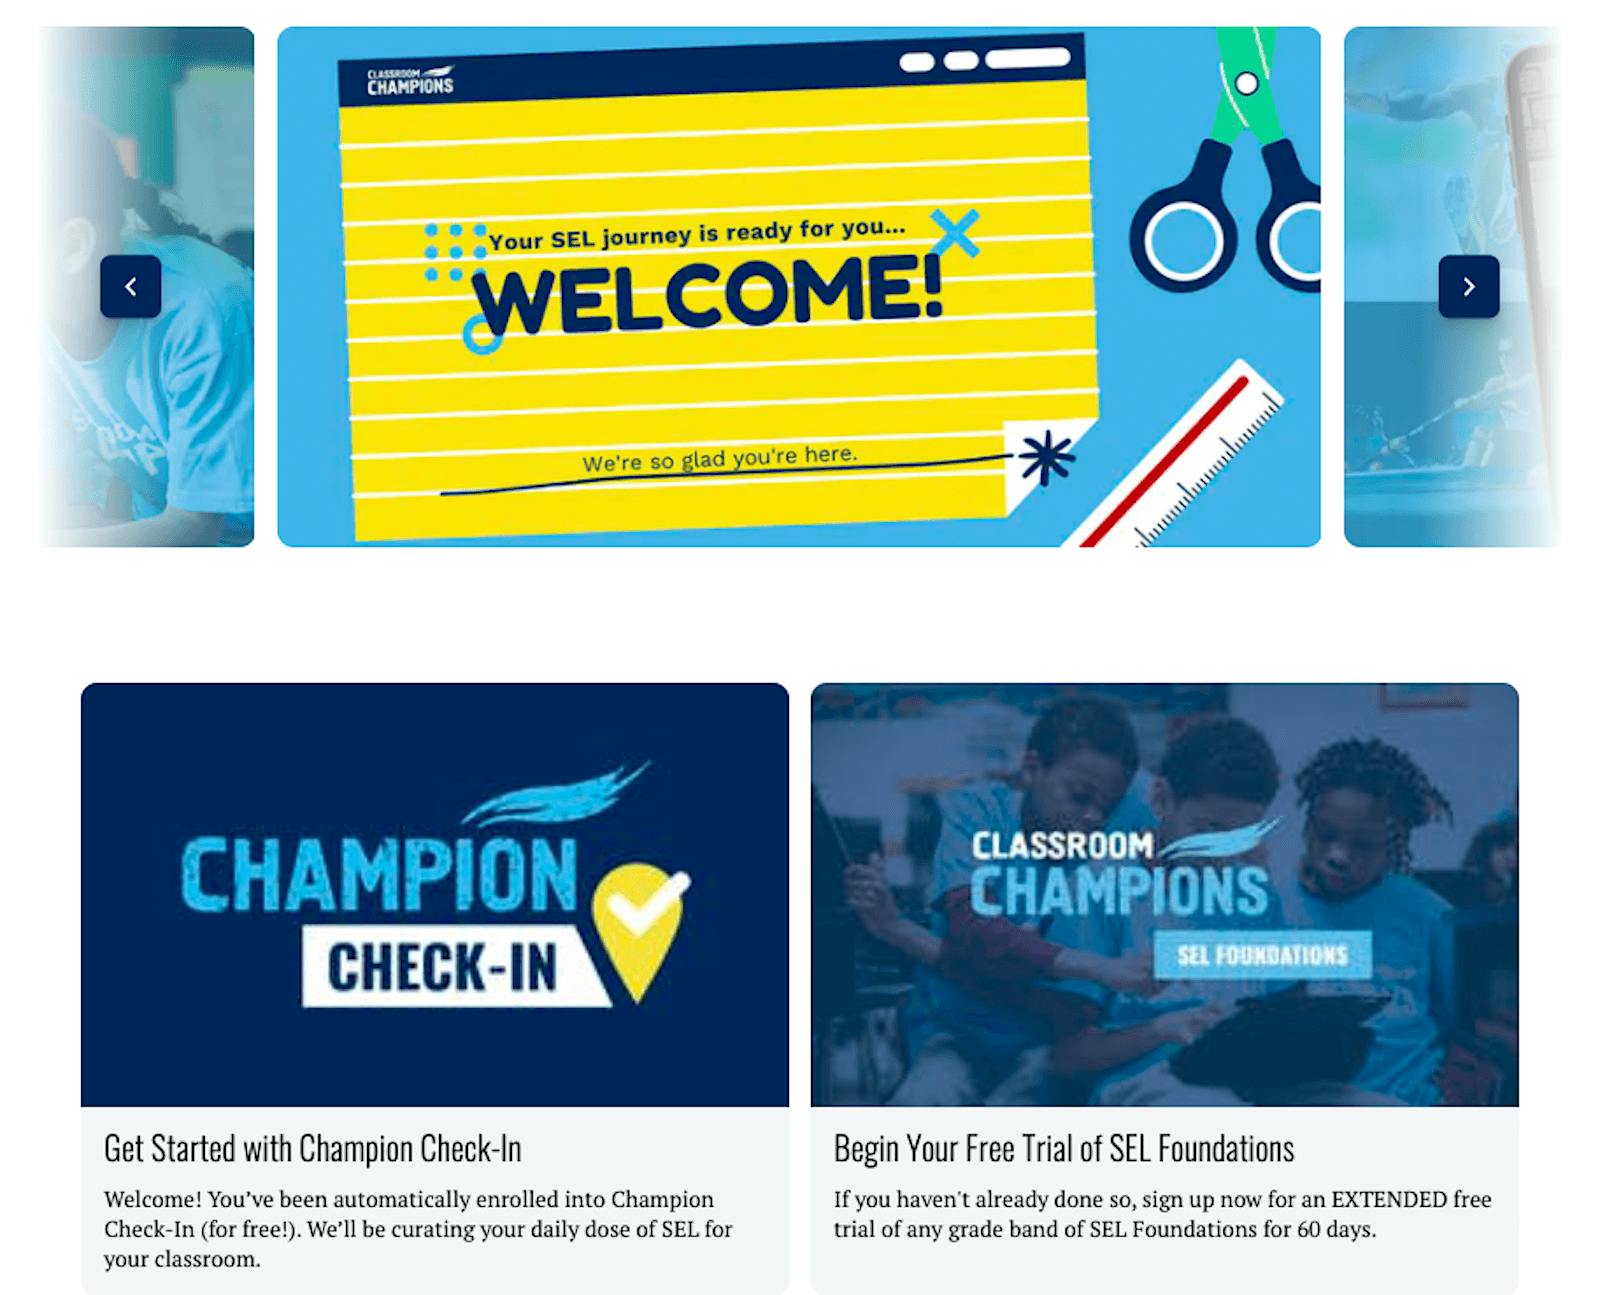 A screenshot of the new Classroom Champions platform